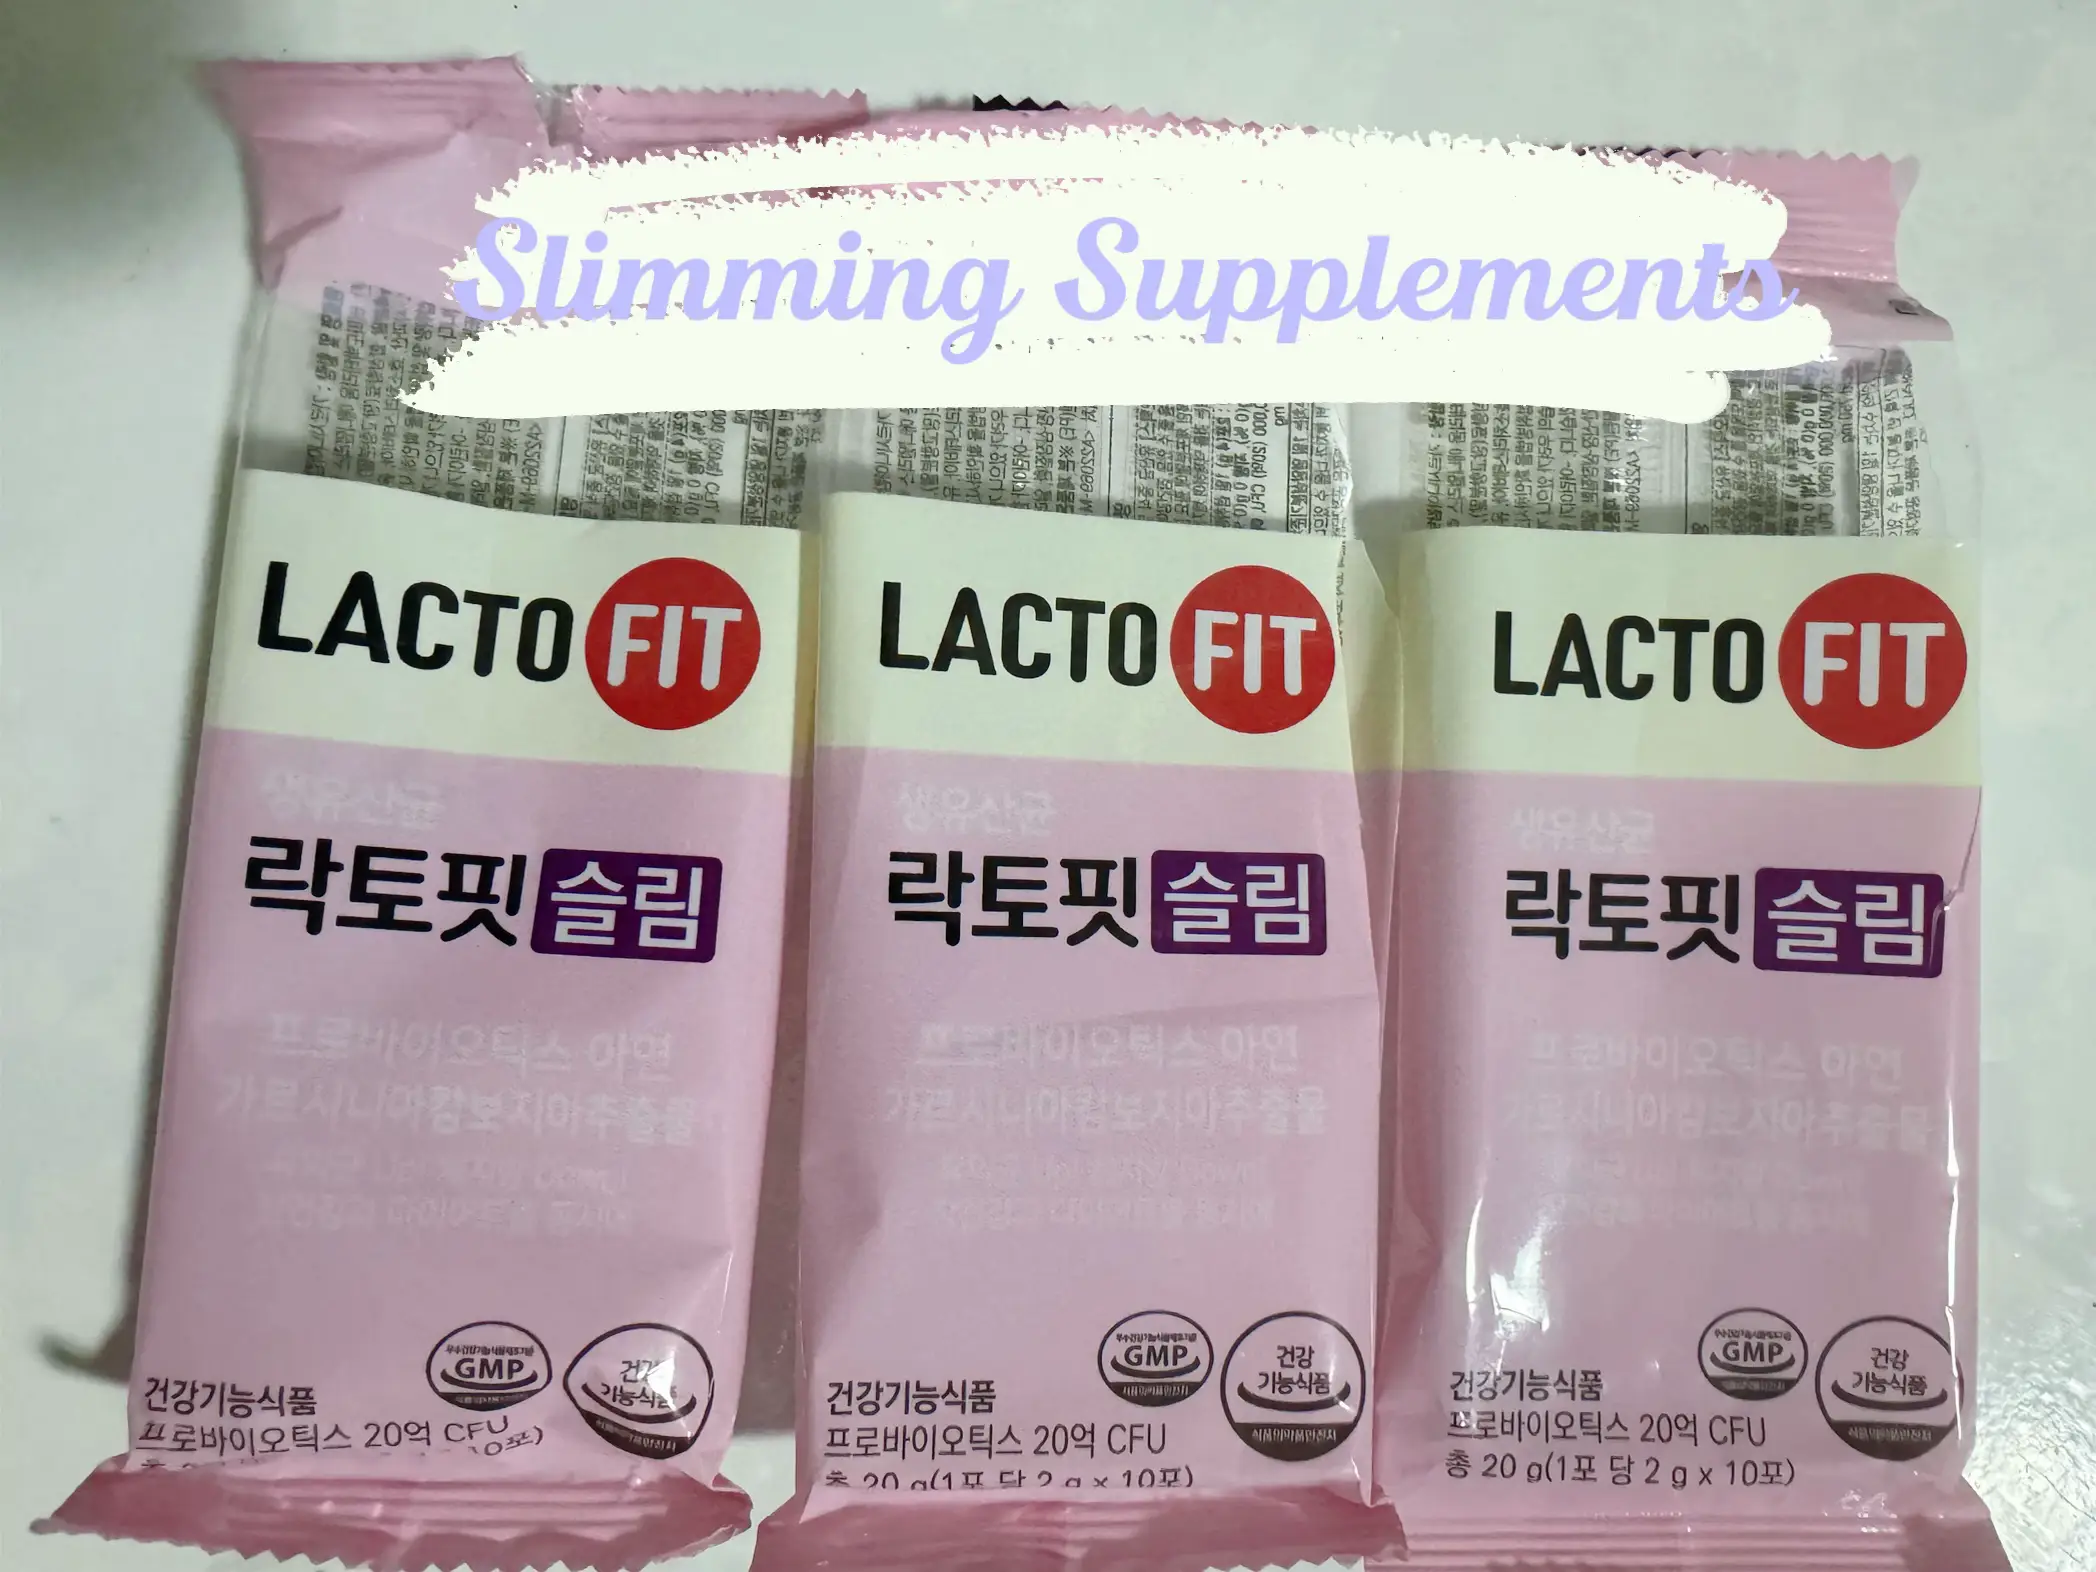 Lacto-Fit Slim Korean slimming supplements's images